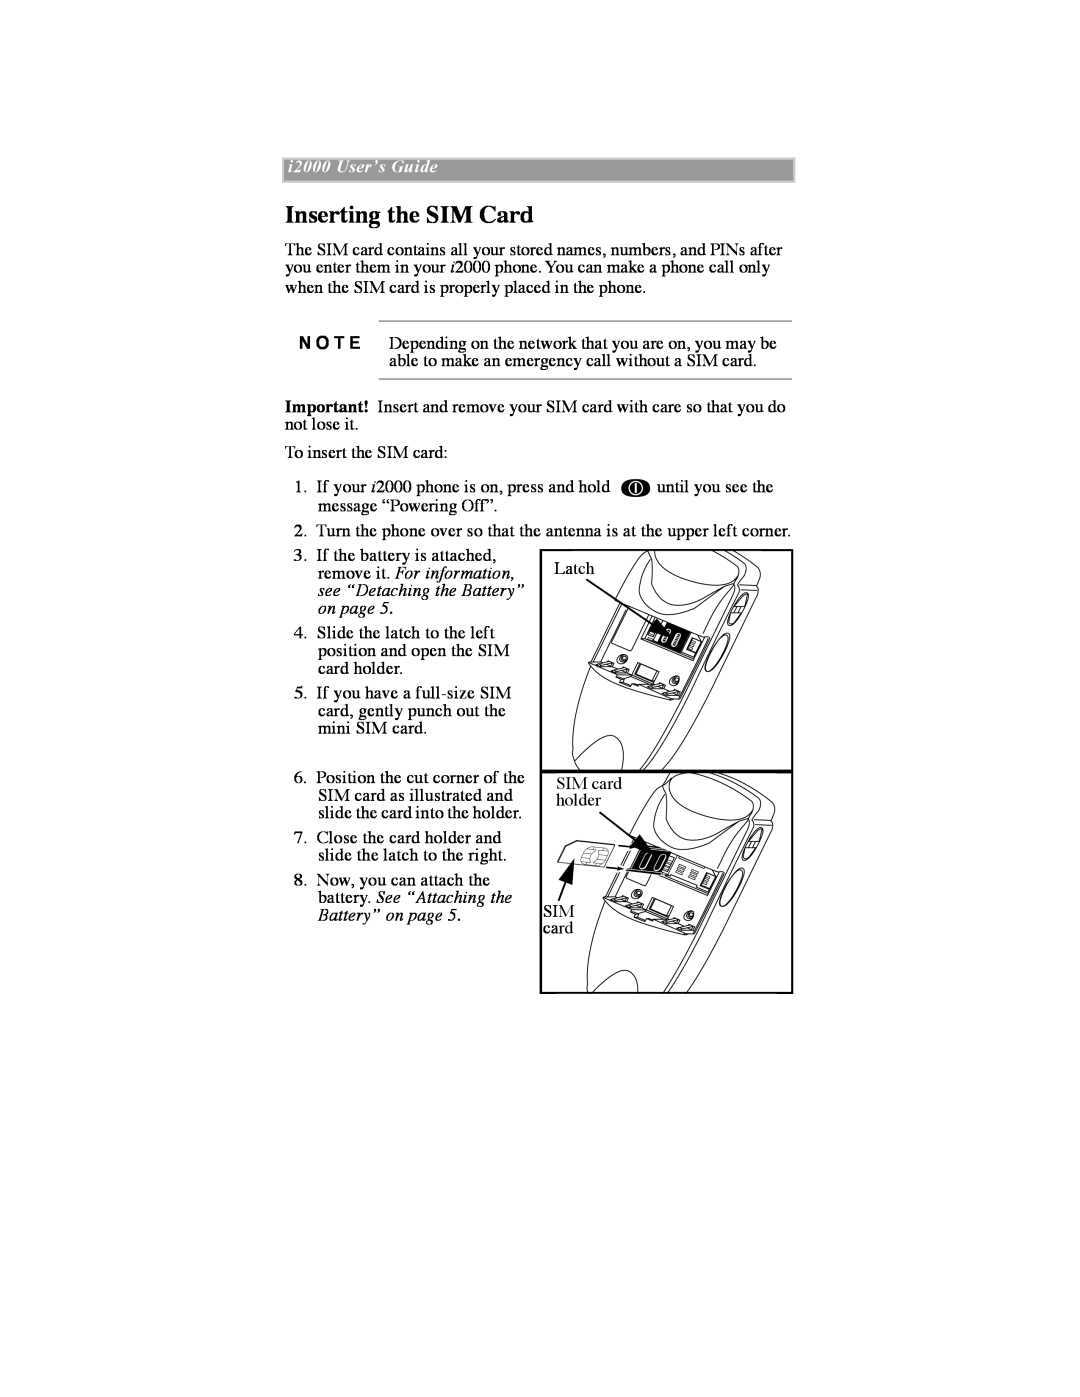 Motorola iDEN manual Inserting the SIM Card, Latch, i2000 UserÕs Guide 